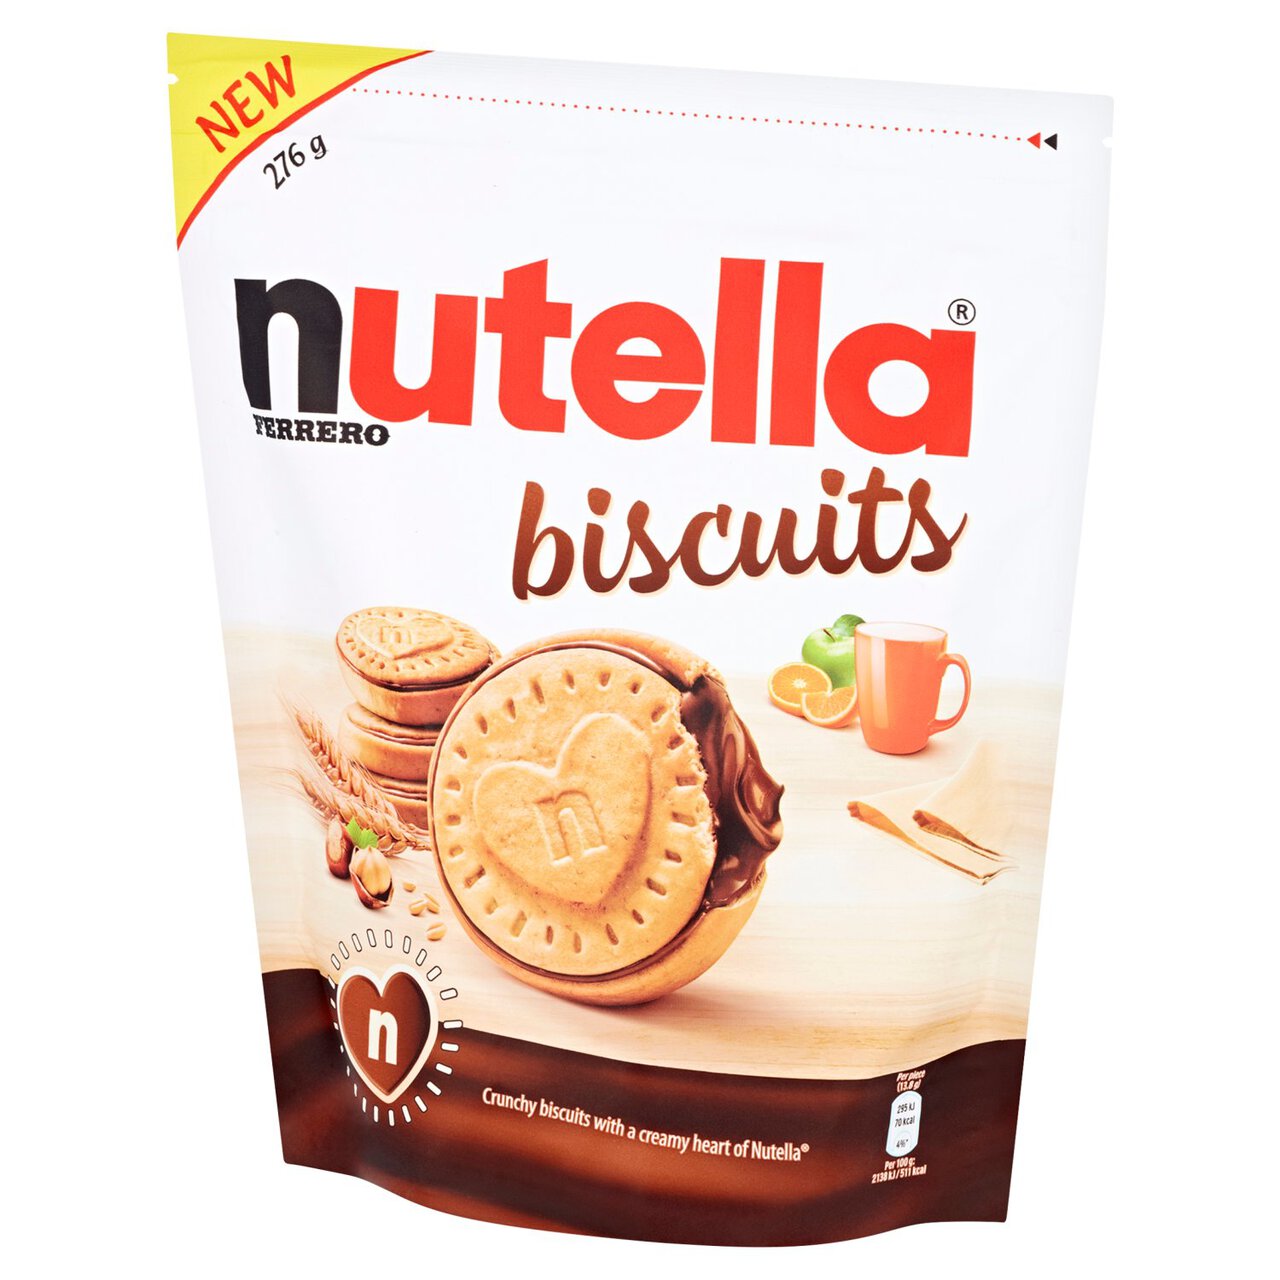 Nutella Biscuits Chocolate & Hazelnut Multipack 267g 276g